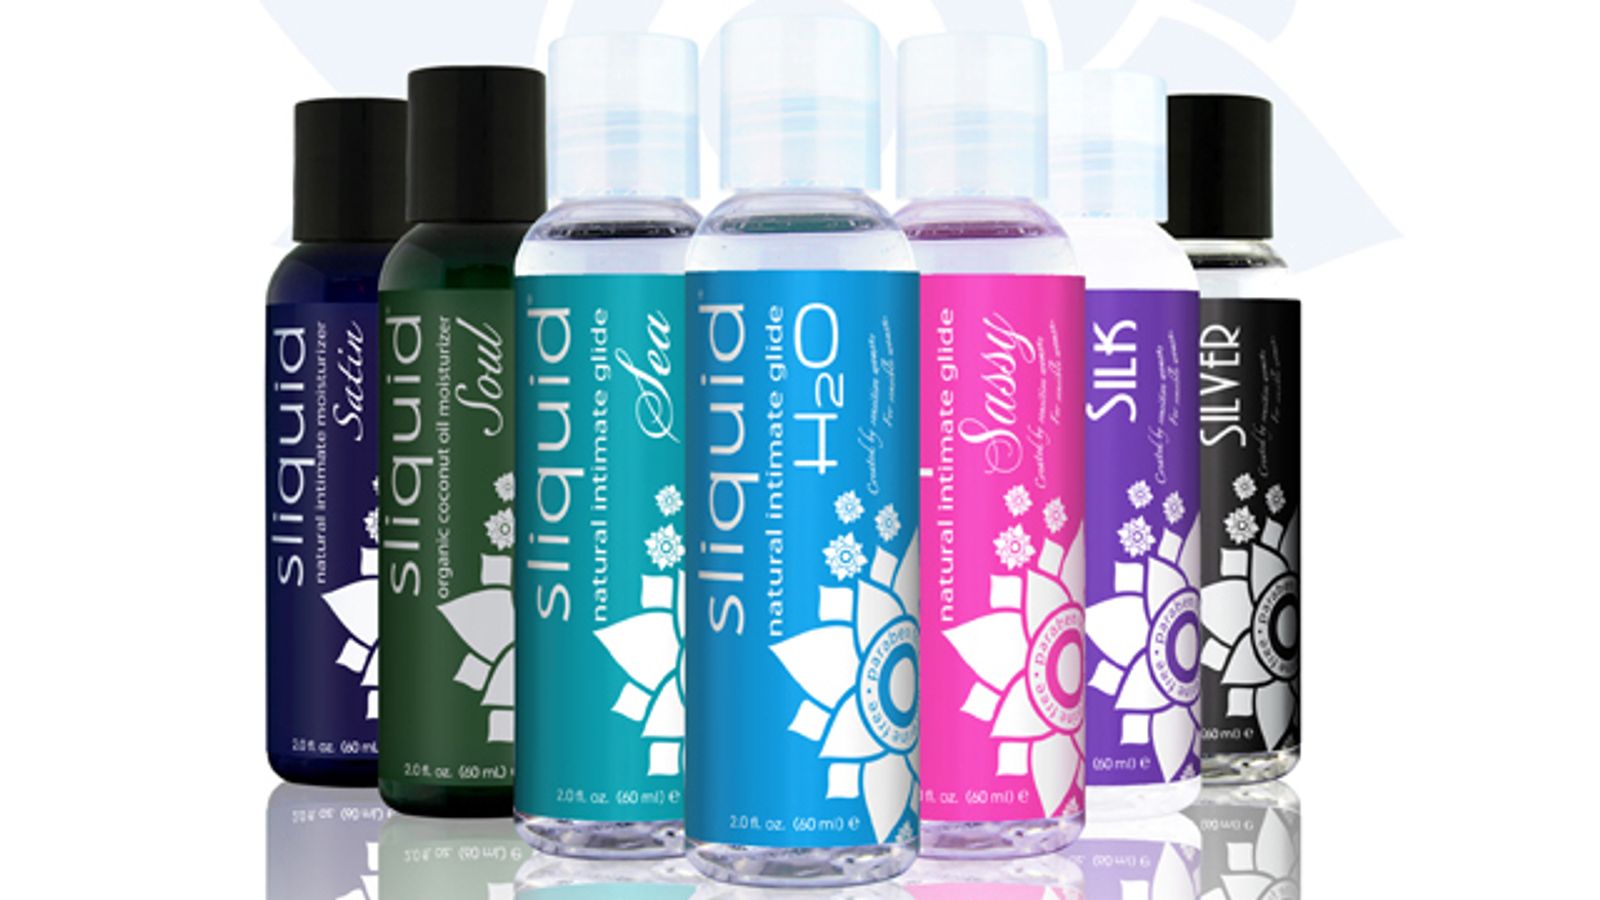 Sliquid Debuts 2oz. Travel-size Bottles of Intimate Essentials